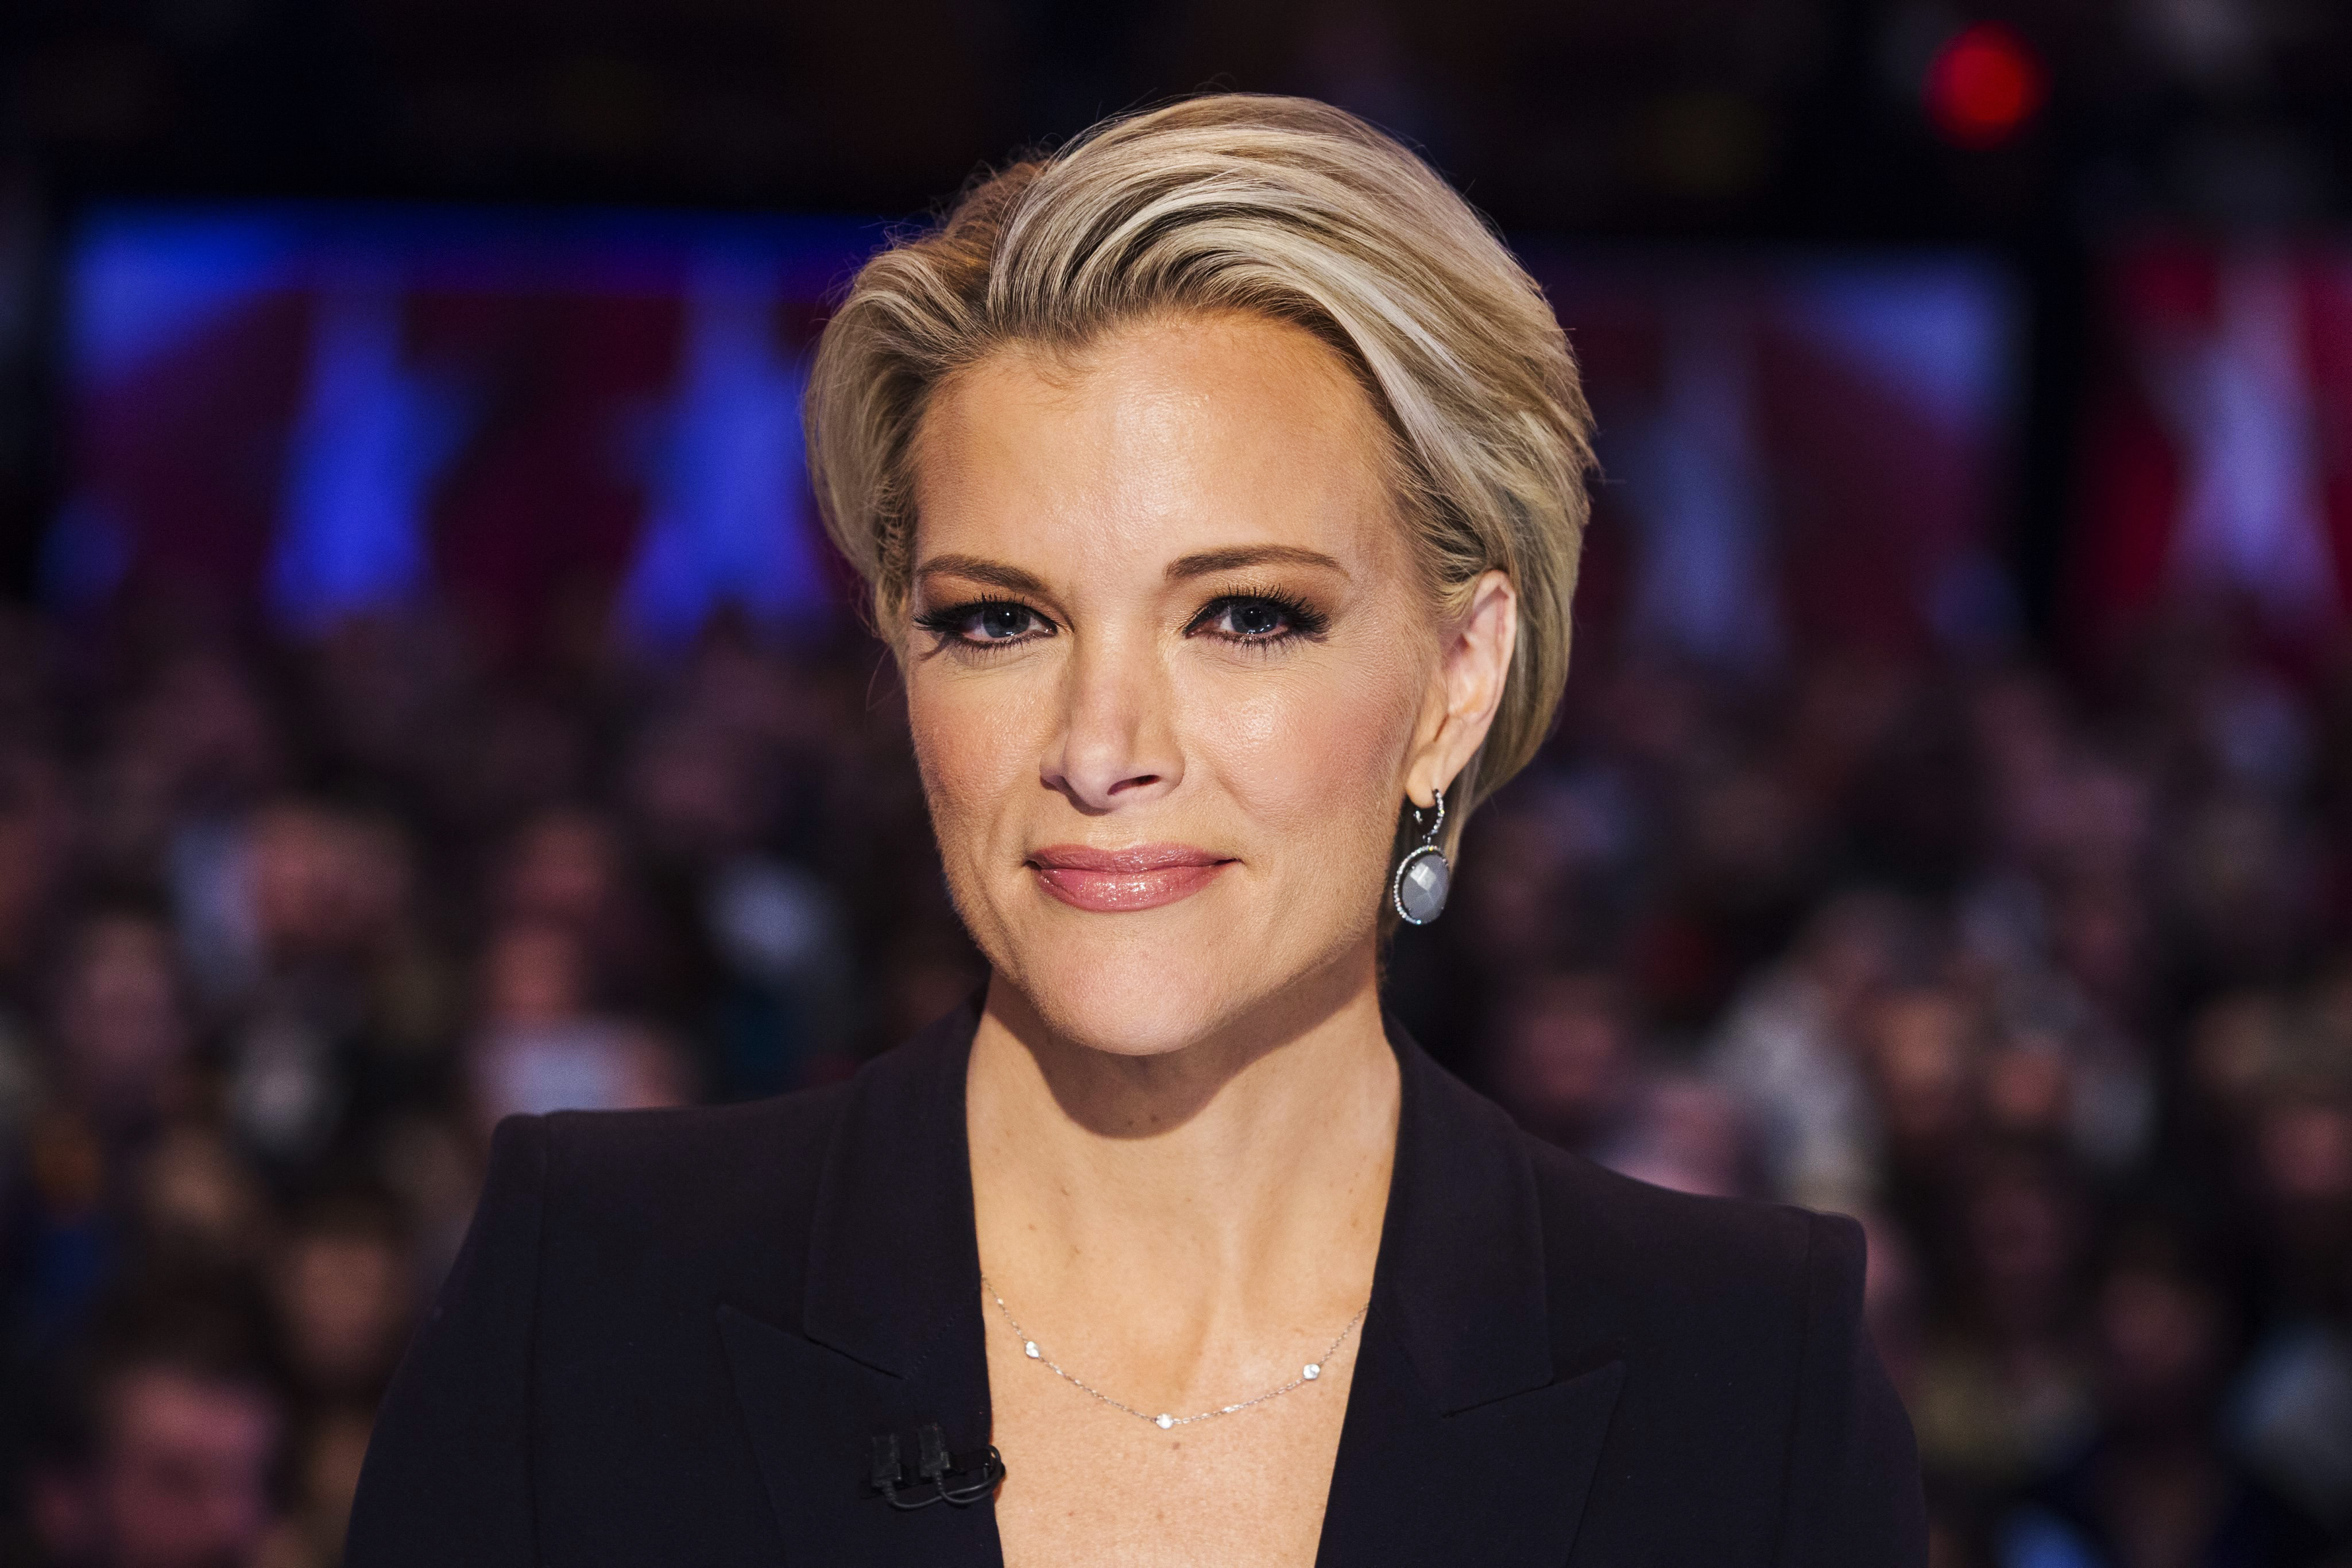 Fox News debate moderator Megyn Kelly at the Republican presidential debate Thursday, Jan. 28, 2016, in Des Moines, Iowa. (Jim Lo Scalzo—EPA)